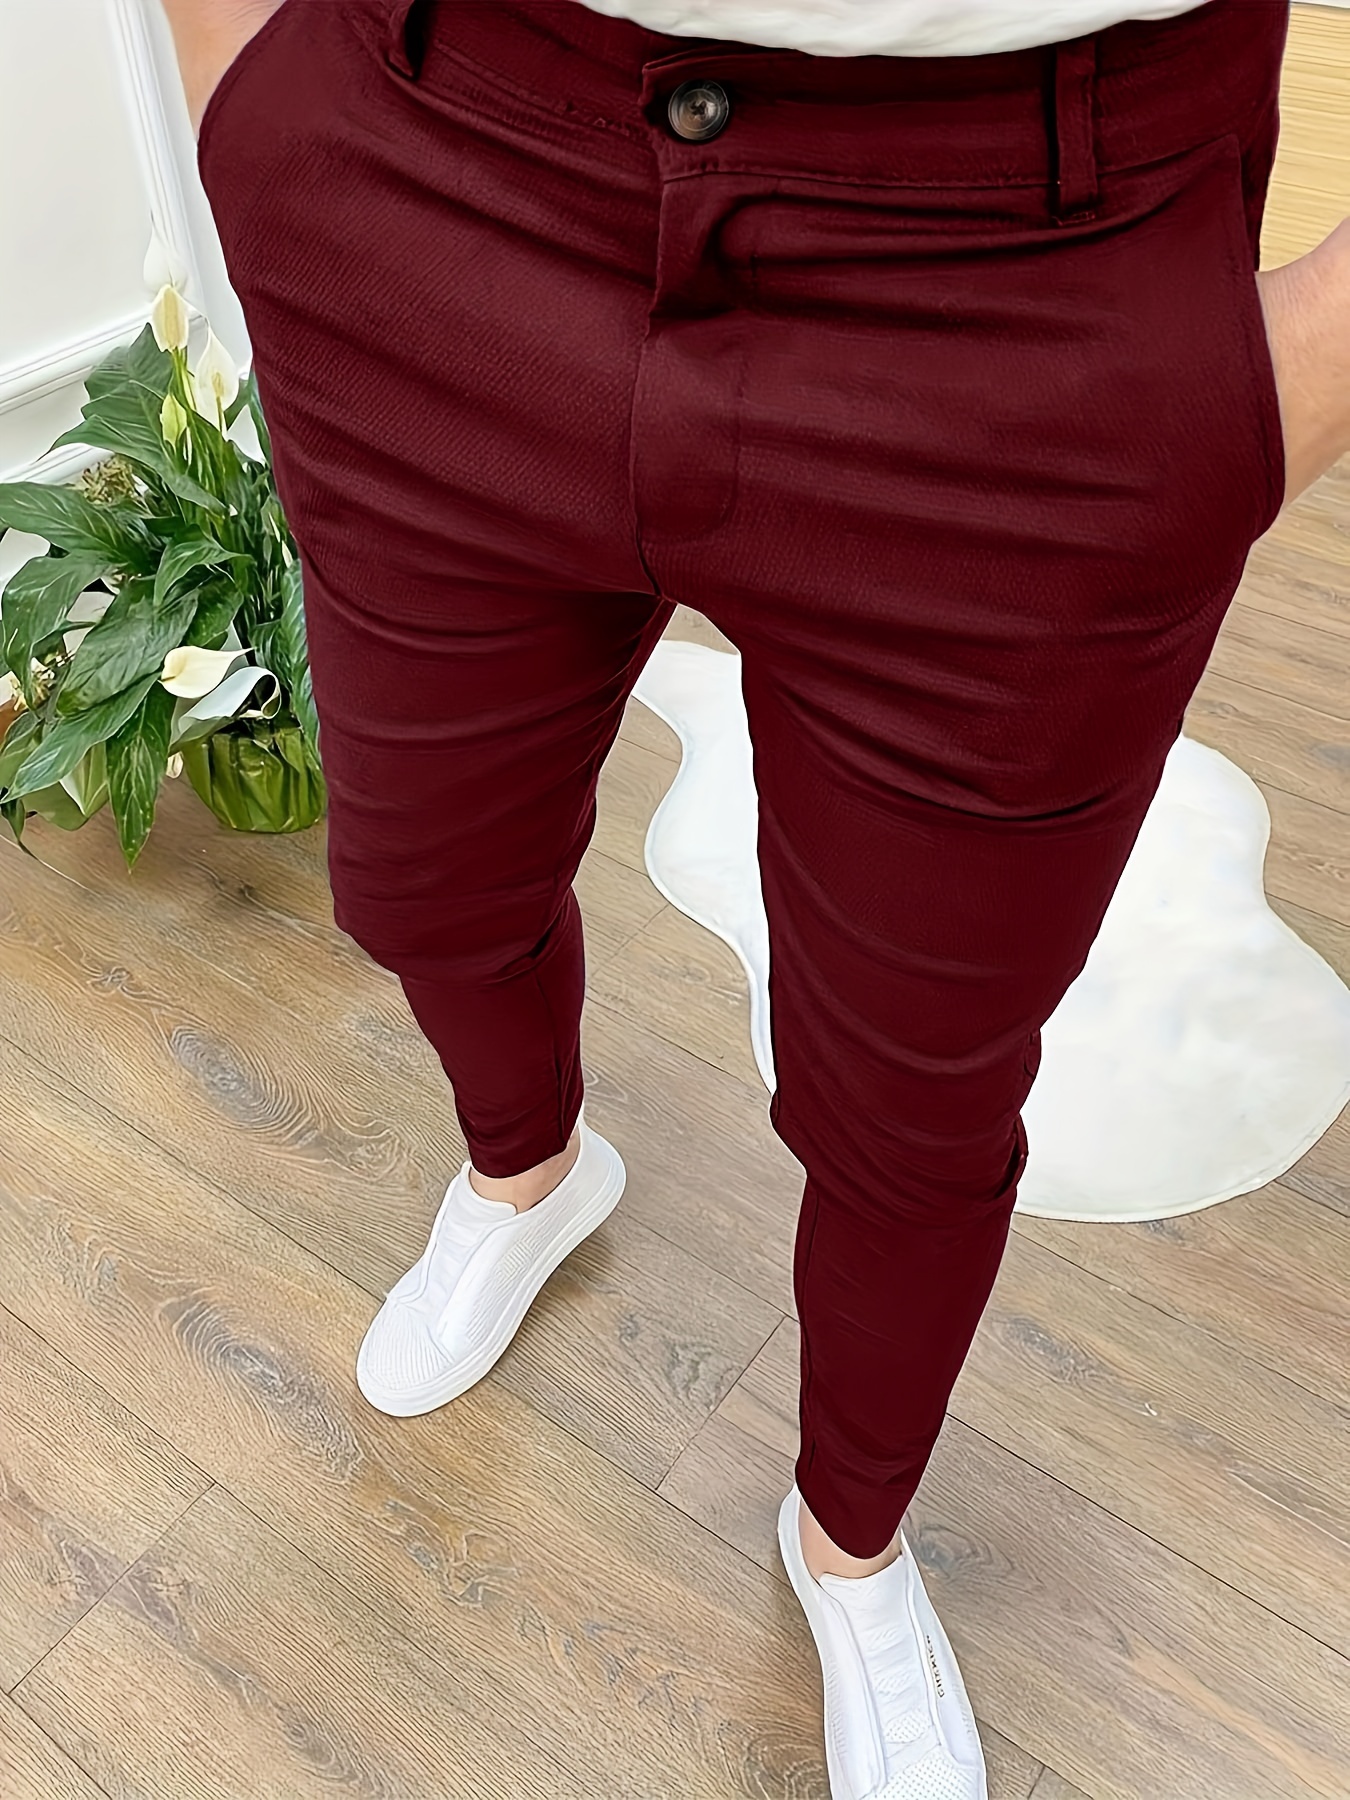 35 Maroon pants ideas  mens outfits maroon pants mens fashion